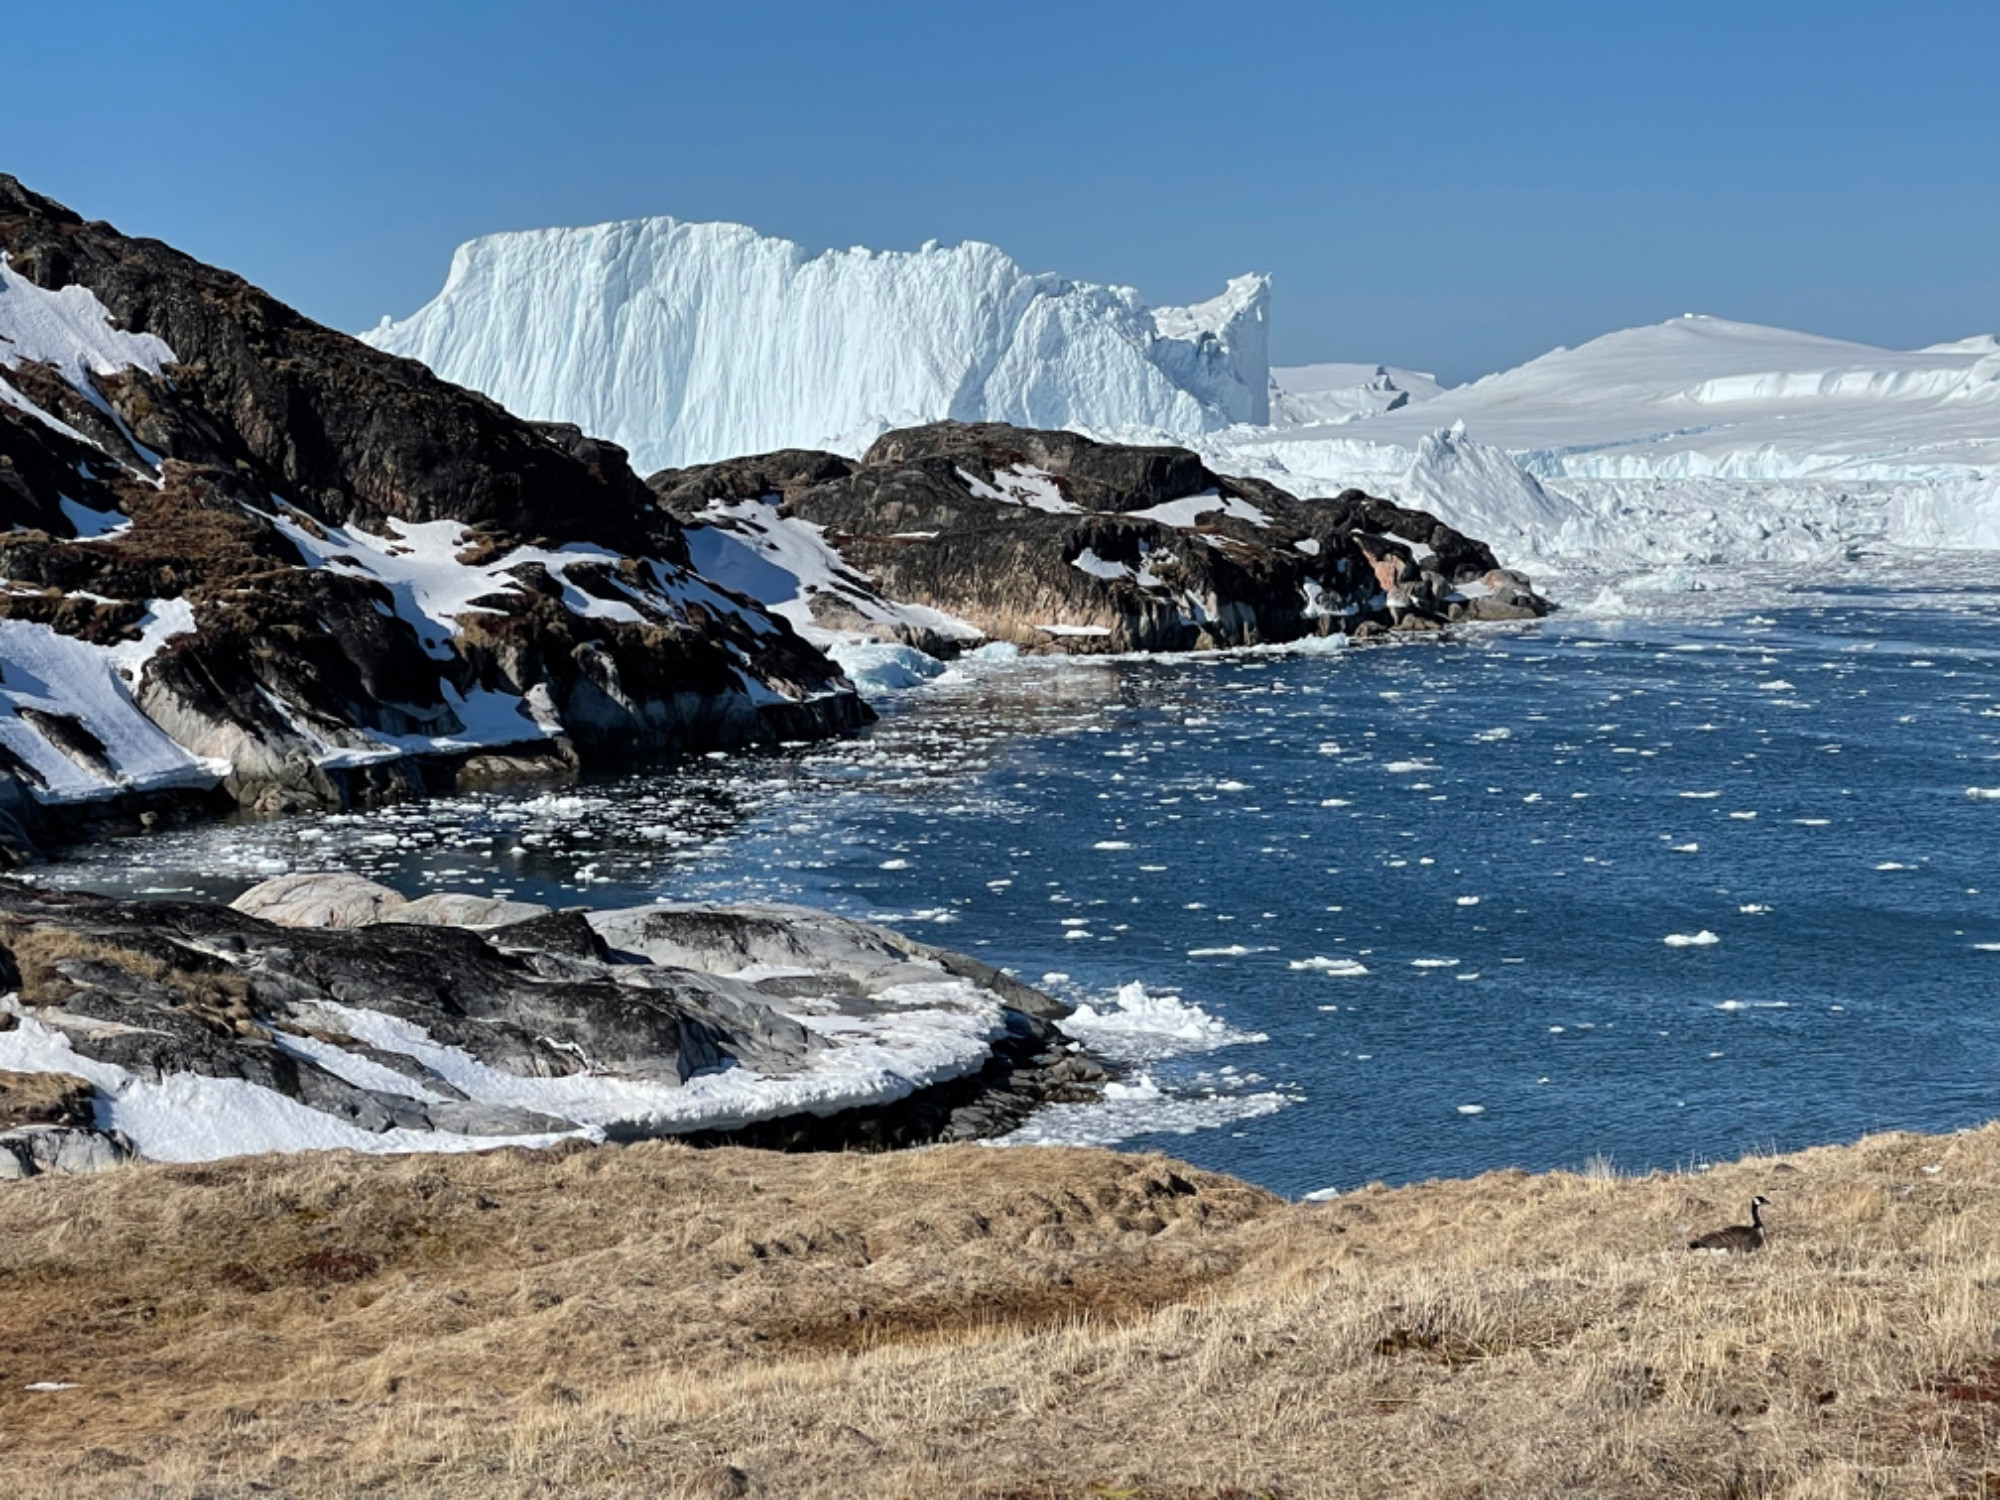 Ningittakkersortoq, Greenland